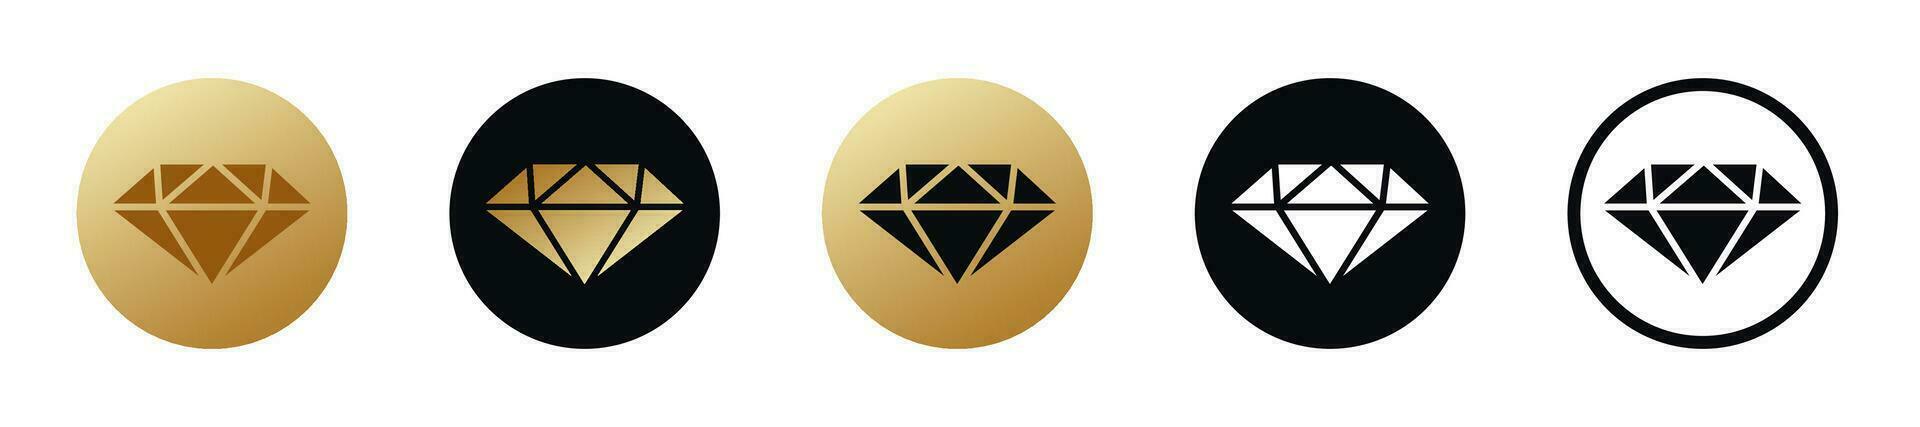 vip Benutzer Diamant Symbol. Prämie Mitglied vektor